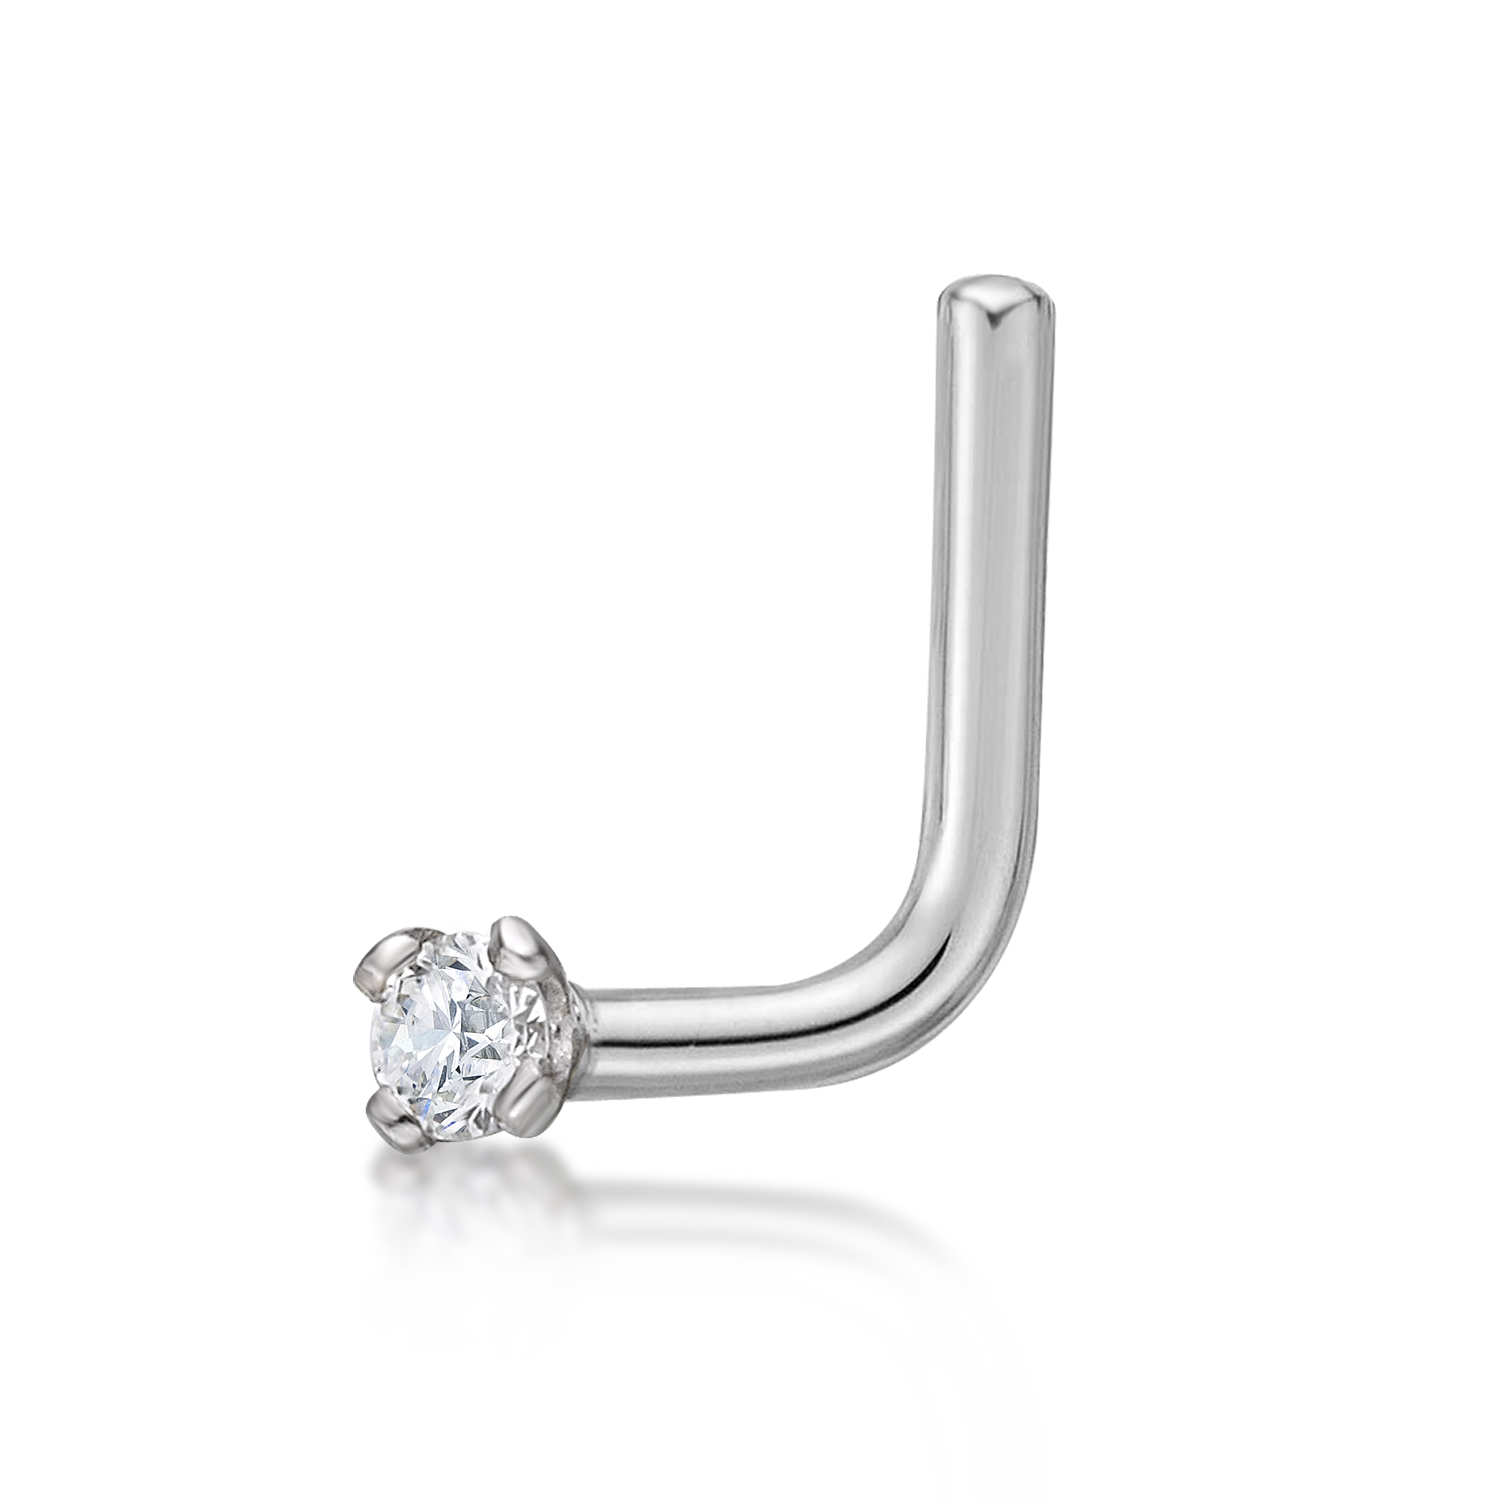 49884-nose-ring-the-piercer-white-gold-white-diamonds-0-01-h-i2-i3-49884-5.jpg